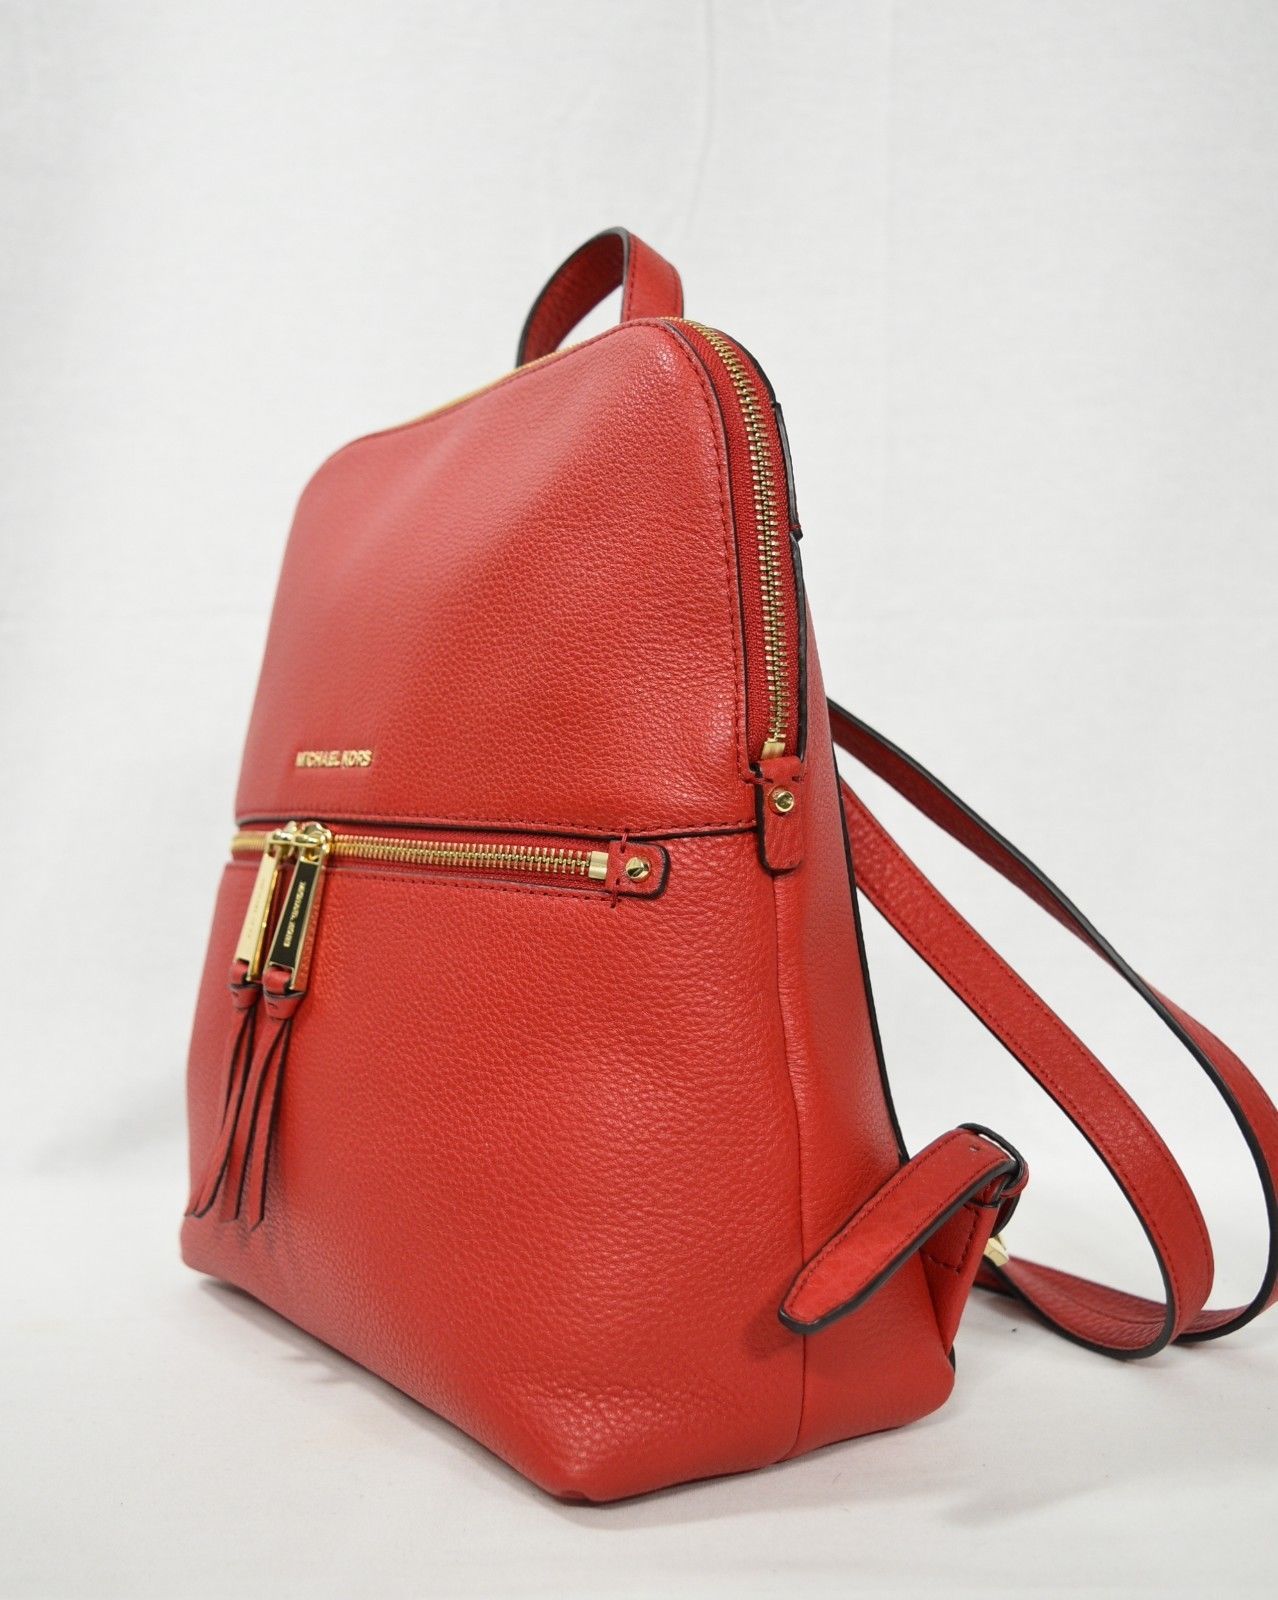 NWT! Michael Kors Leather Rhea Zip Medium Slim Backpack in Bright Red - $239.00